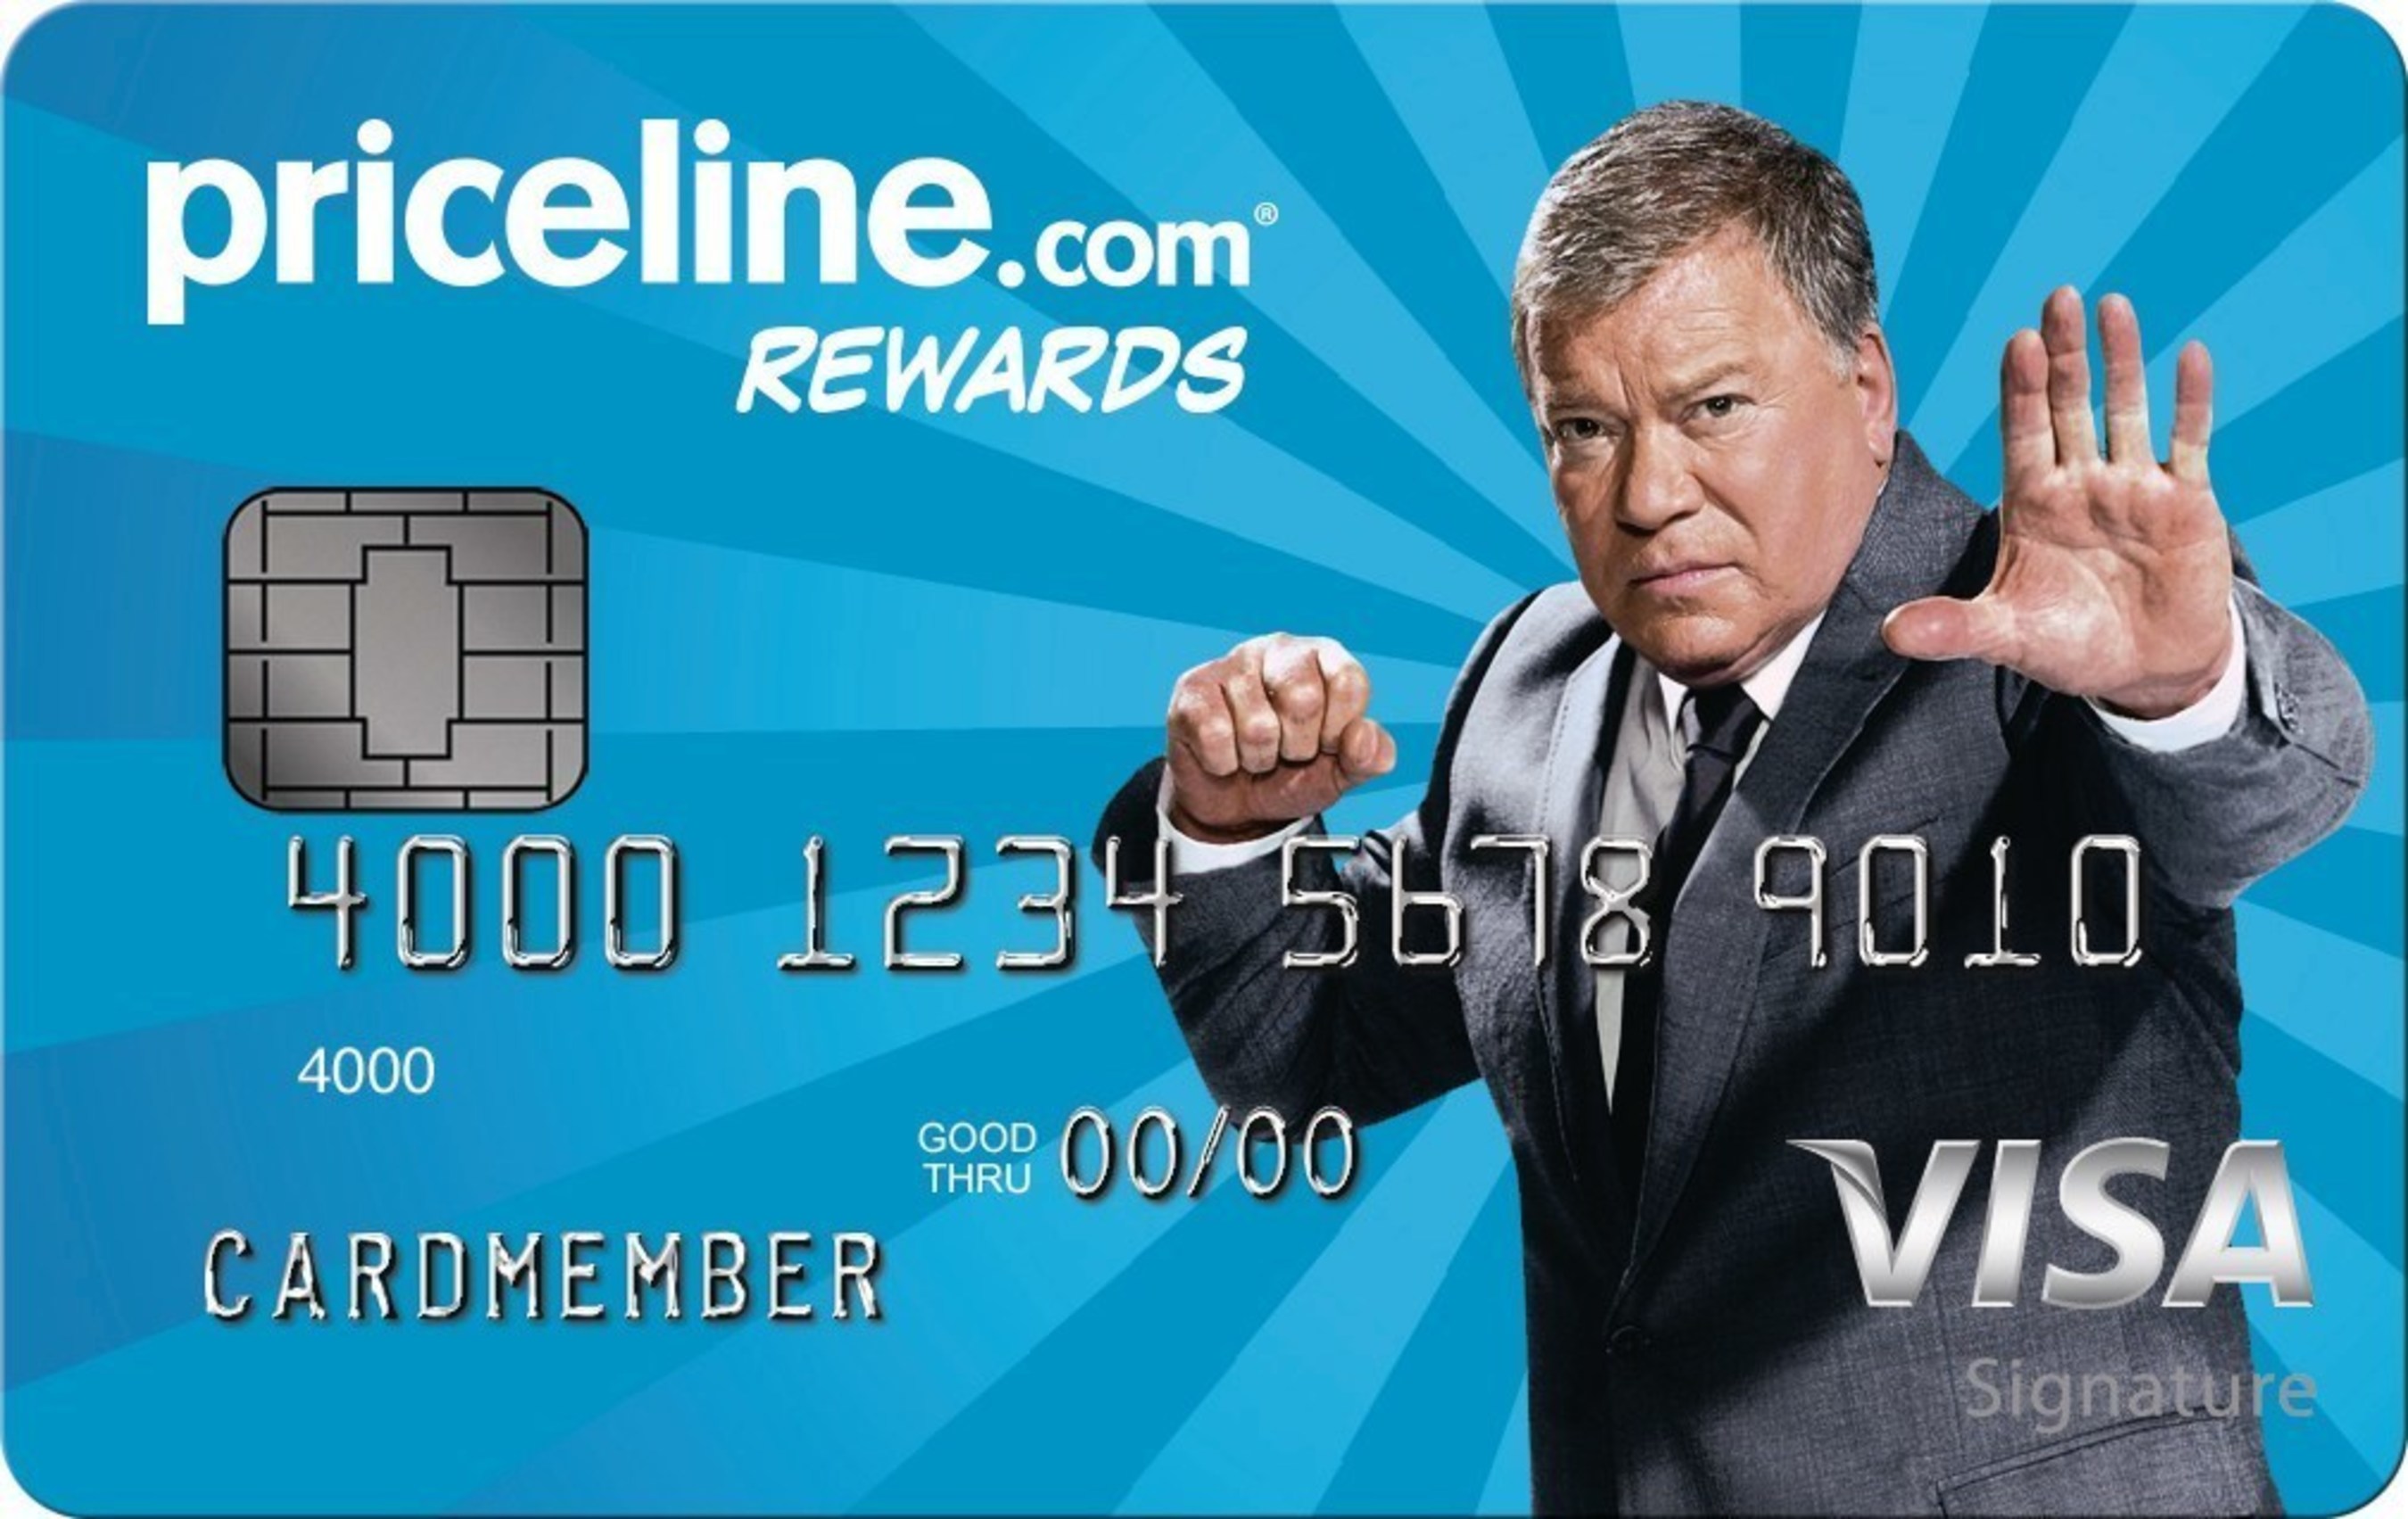 priceline.com rewards Visa card